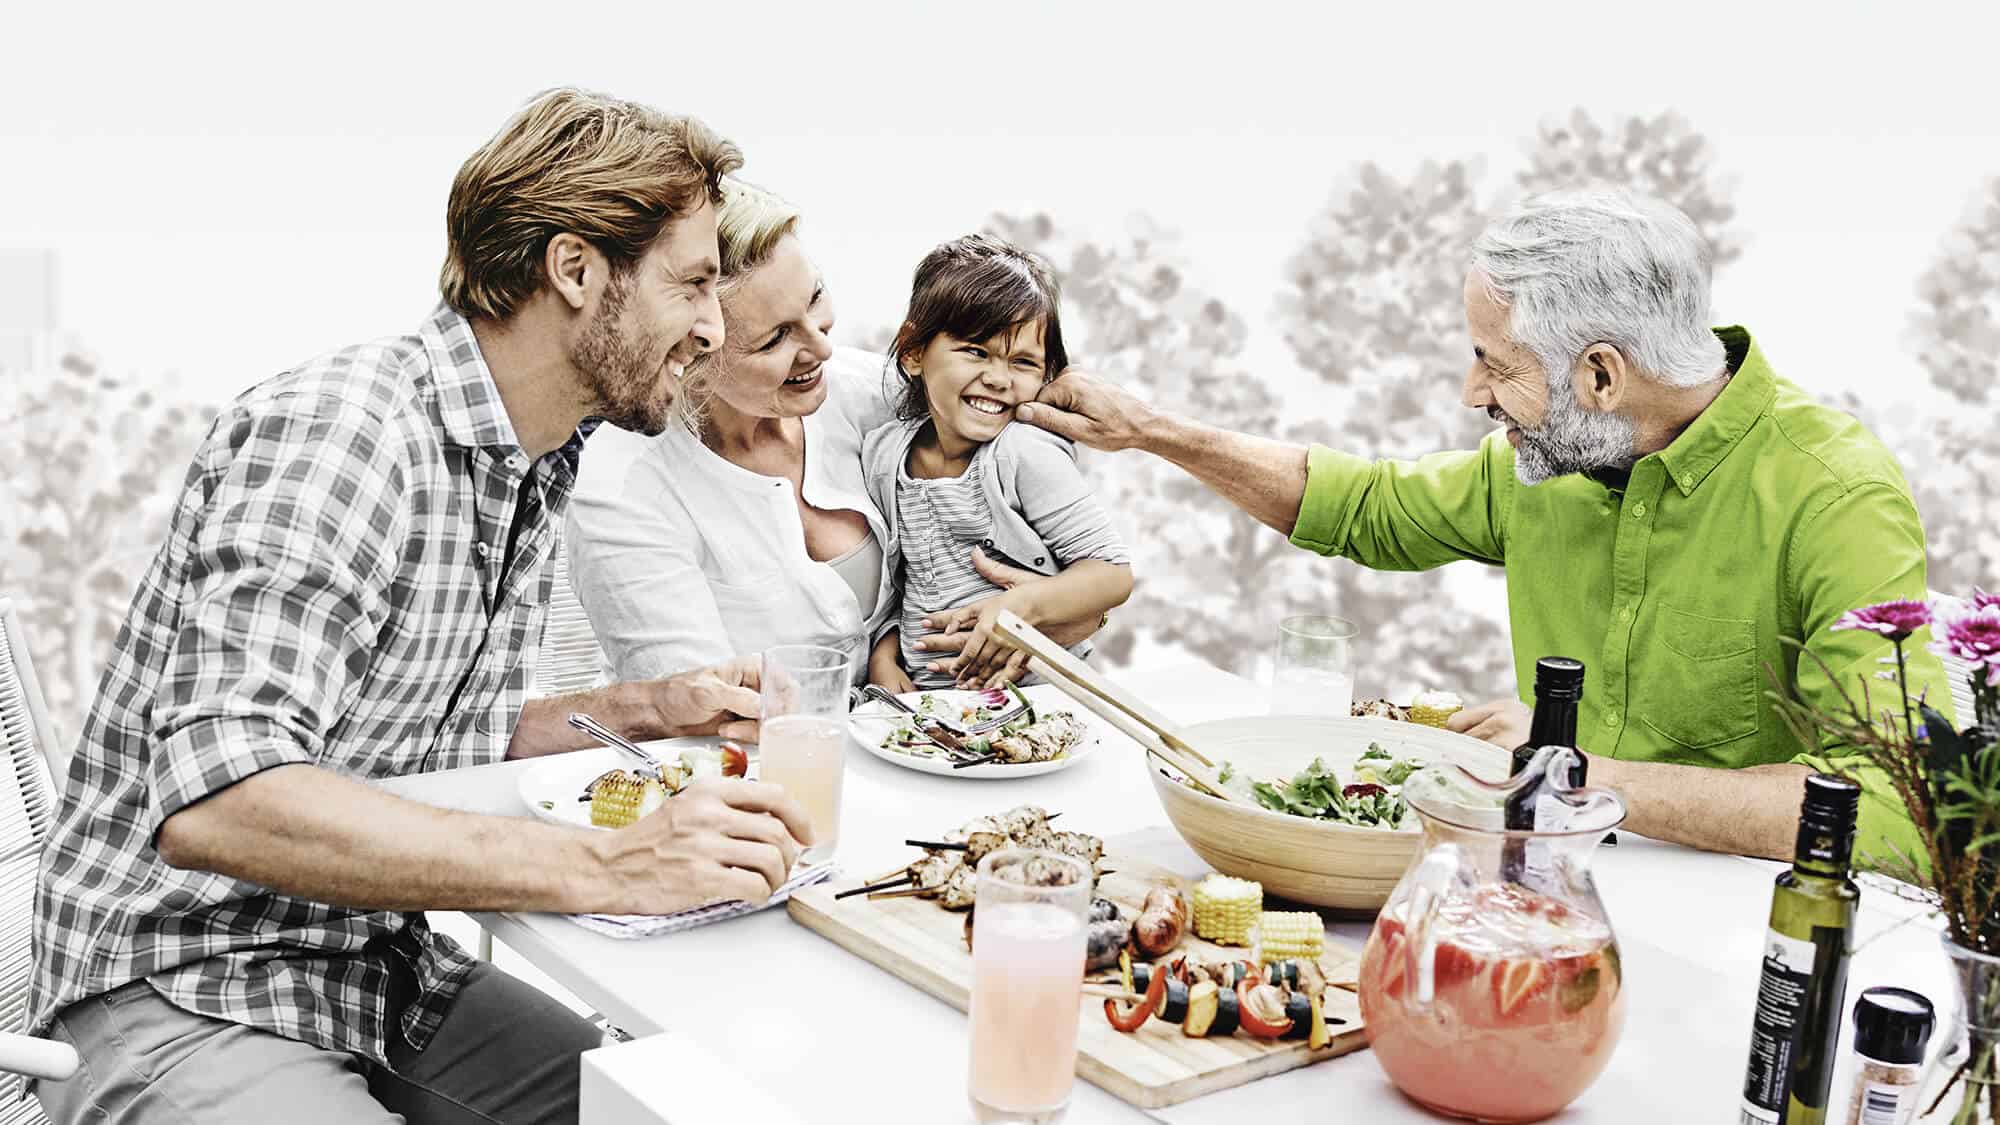 Family picnic / Pique-nique en famille